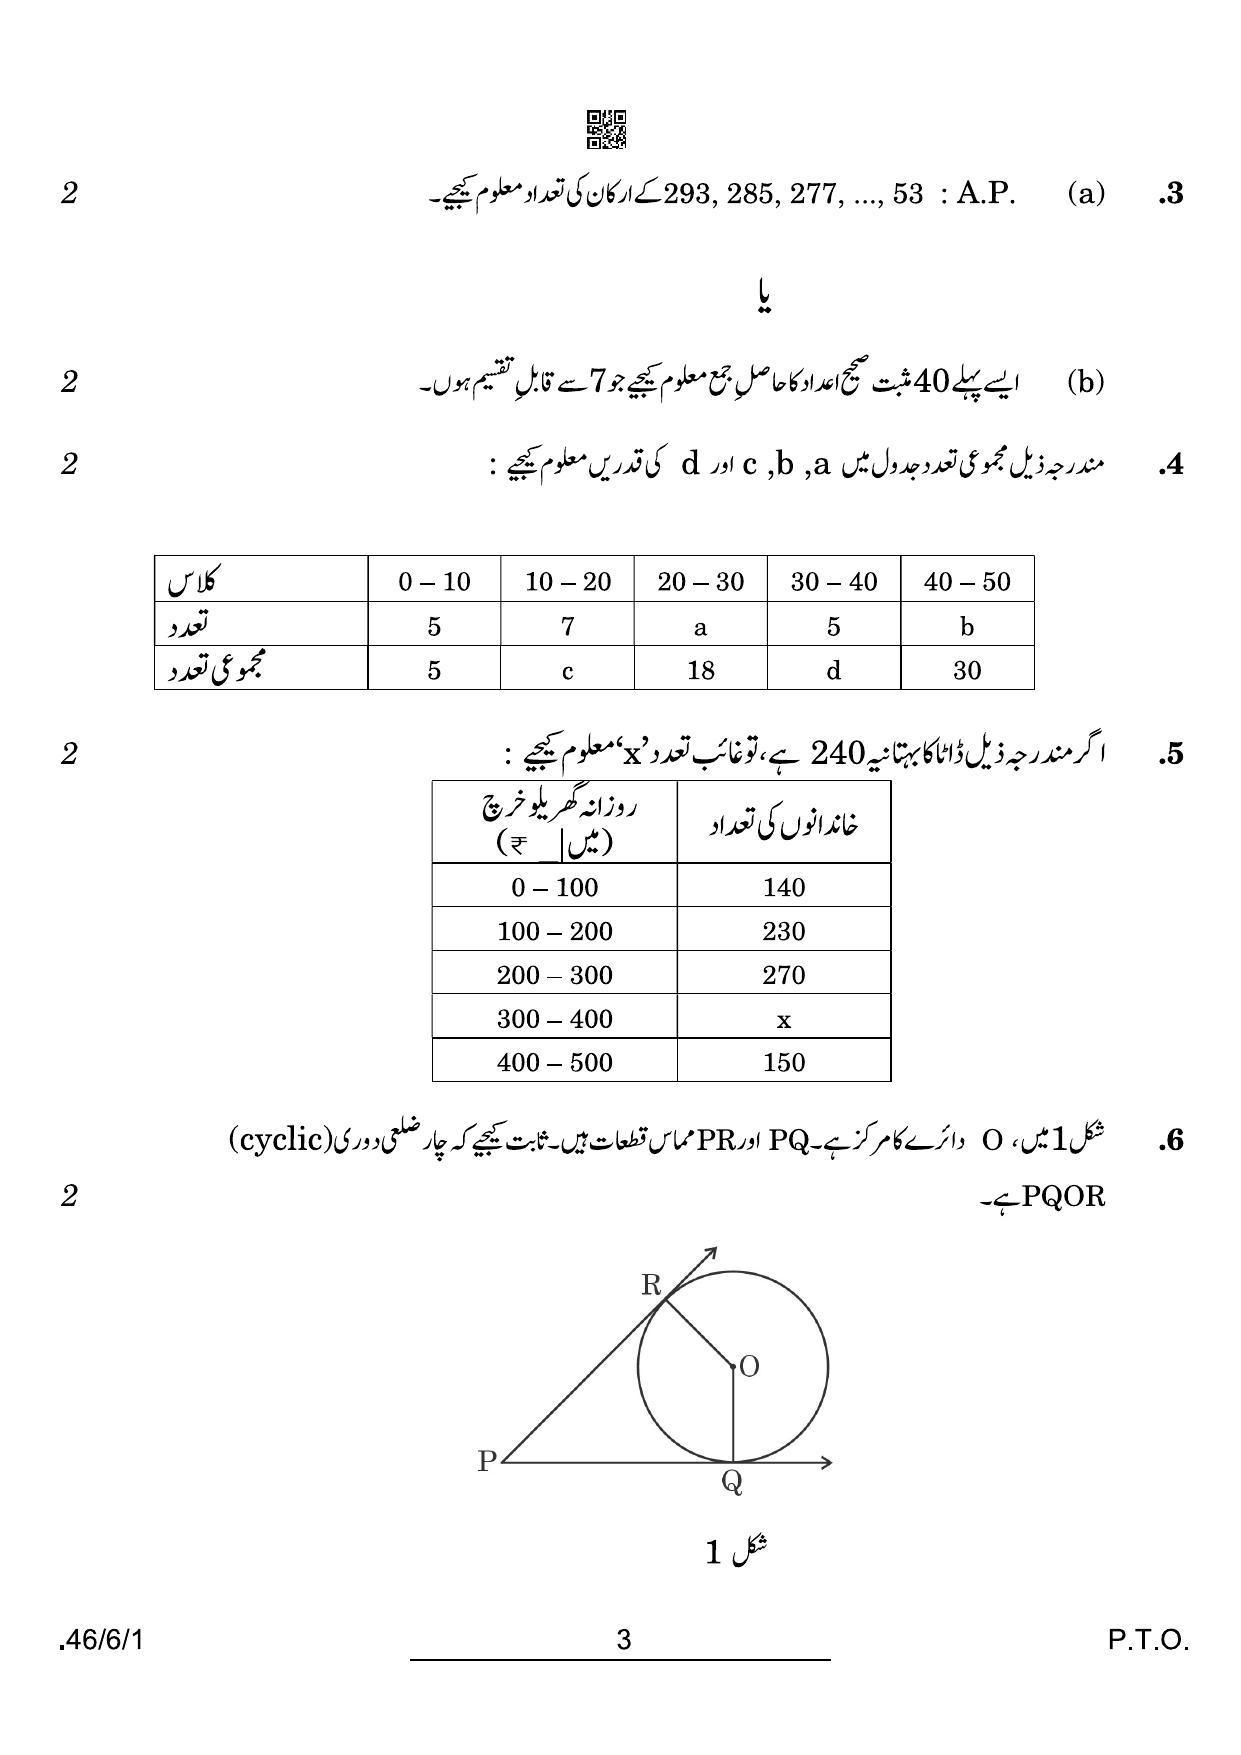 CBSE Class 10 46-6-1 Maths Standard Urdu 2022 Compartment Question Paper - Page 3